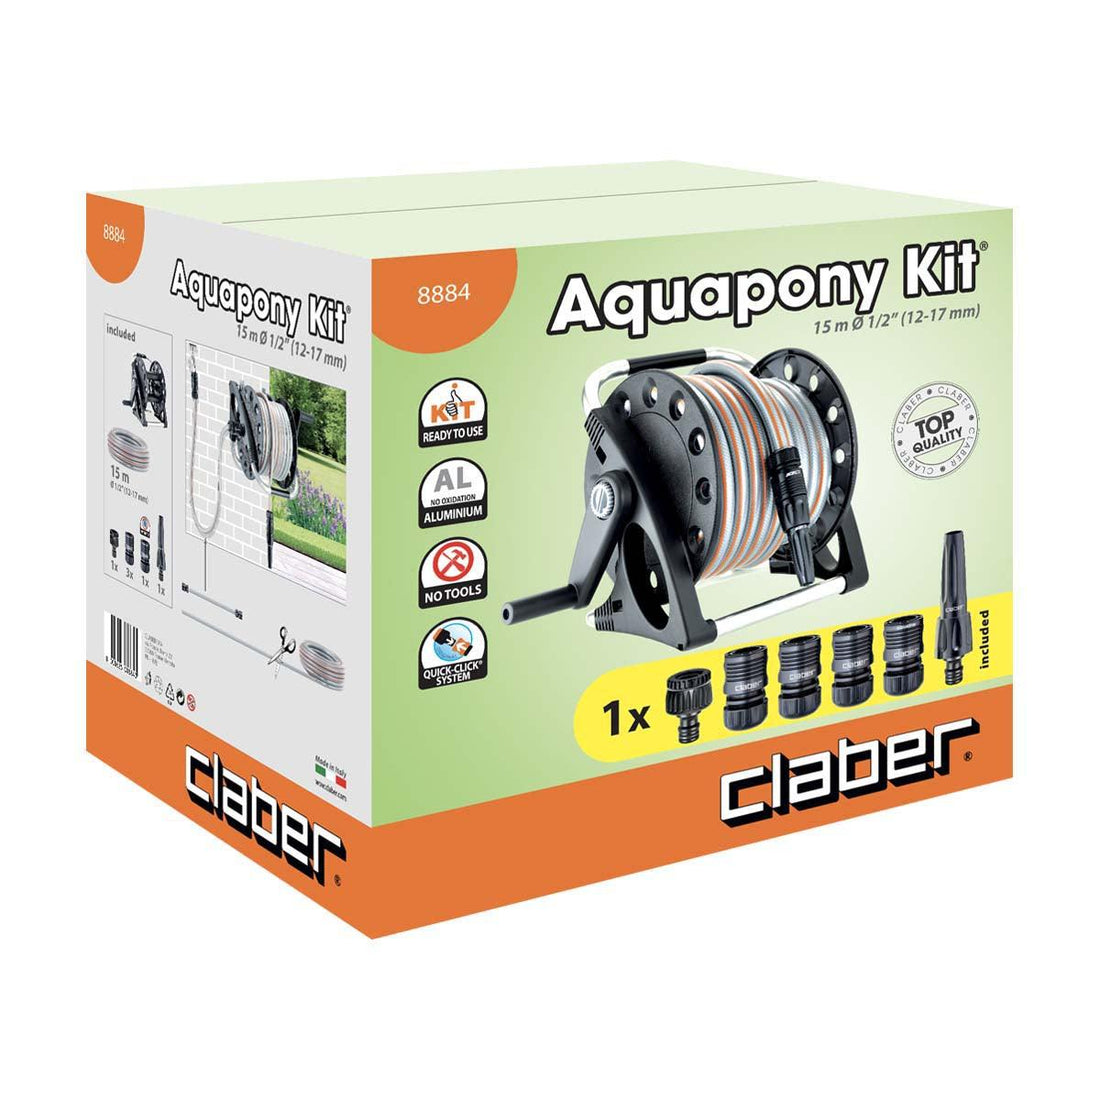 Aquapony Kit - Hose &amp; Reel-8884 - THE GARDEN CENTRE